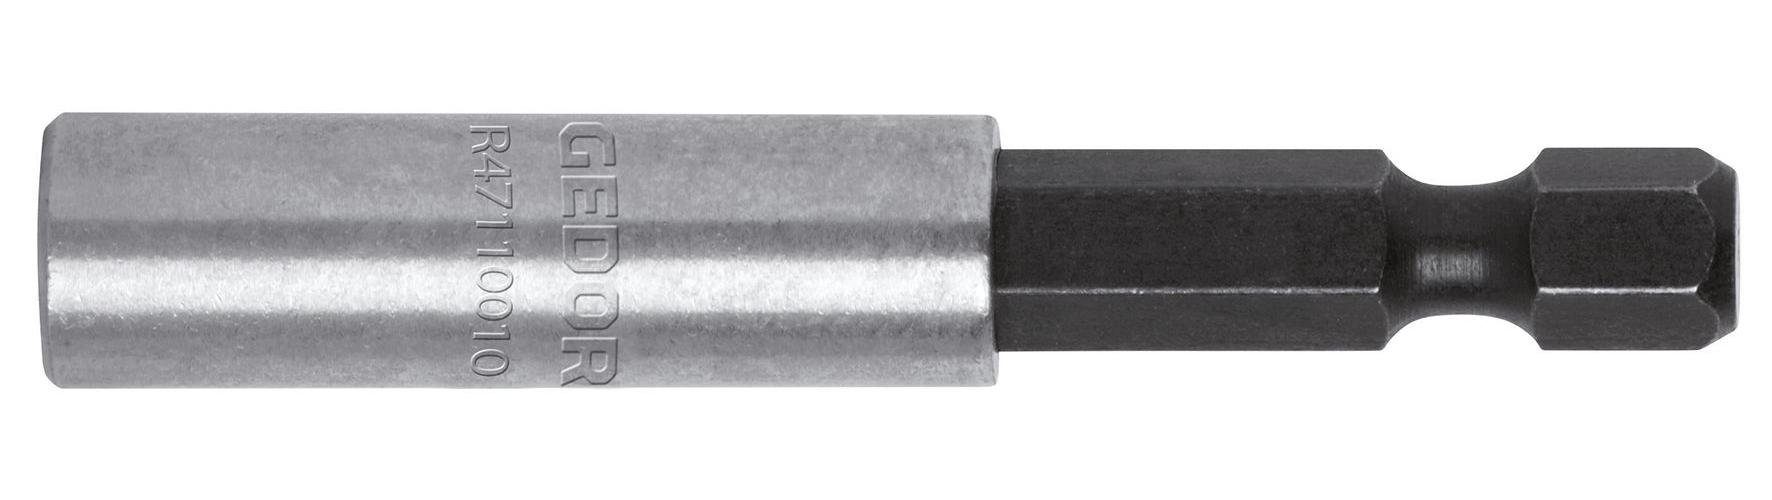 Gedore Red Ratschenringschlüssel R47110014 Bithalter 1/4 6-kant x 1/4 6-kant magnetisch 75 mm